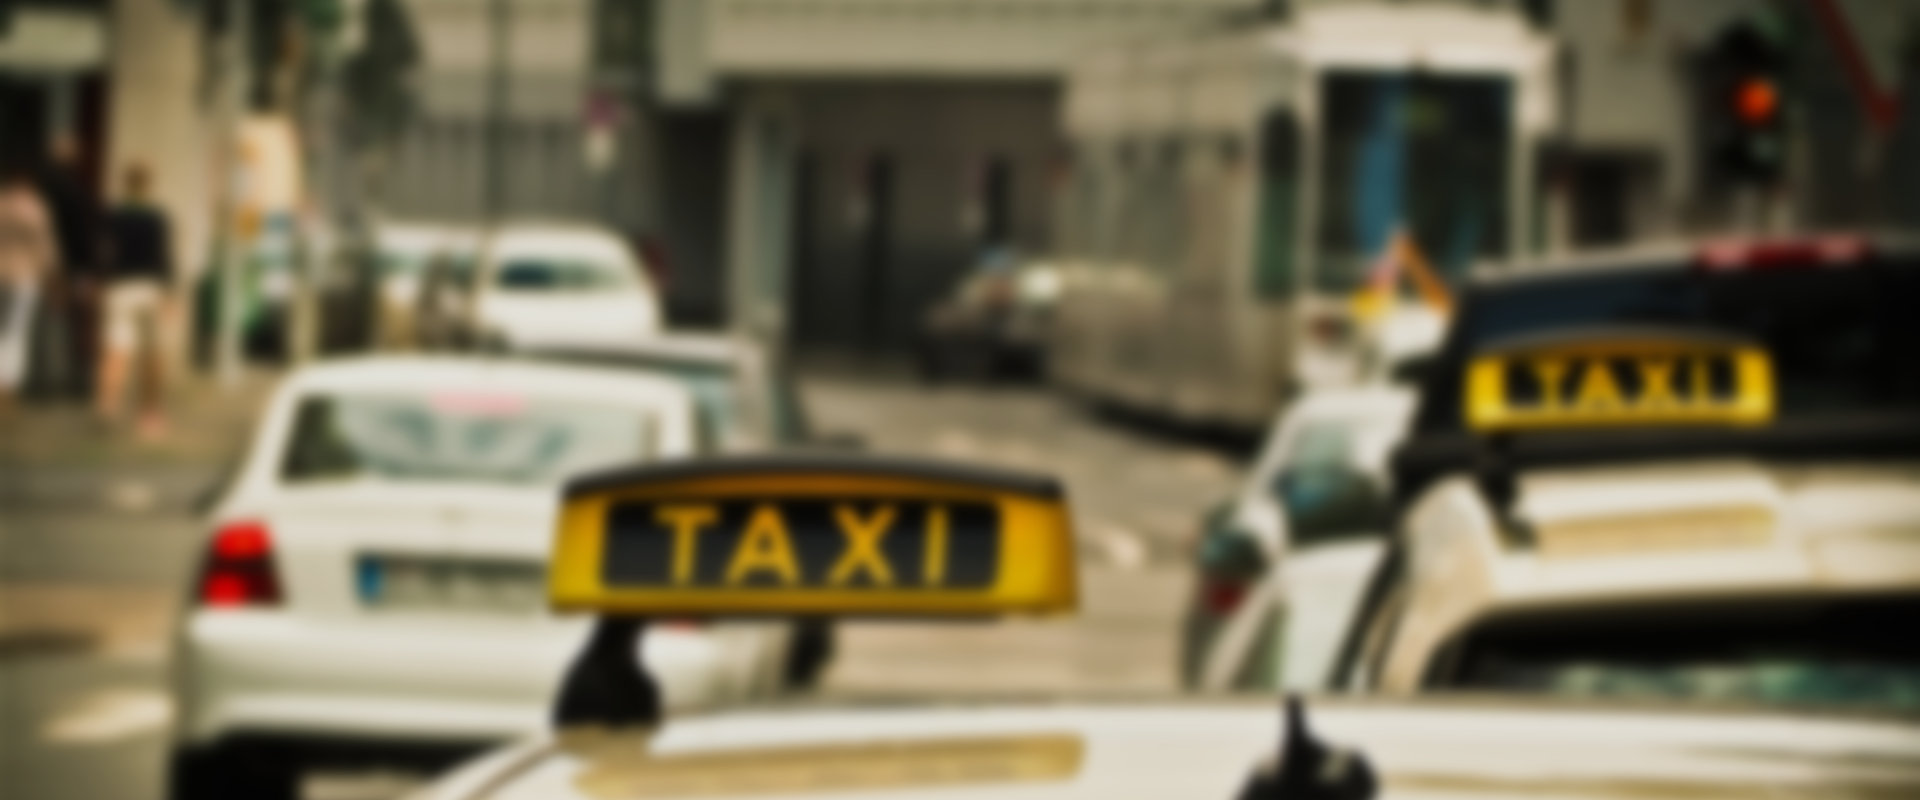 city-cab-taxi-app-kitchener-waterloo-3